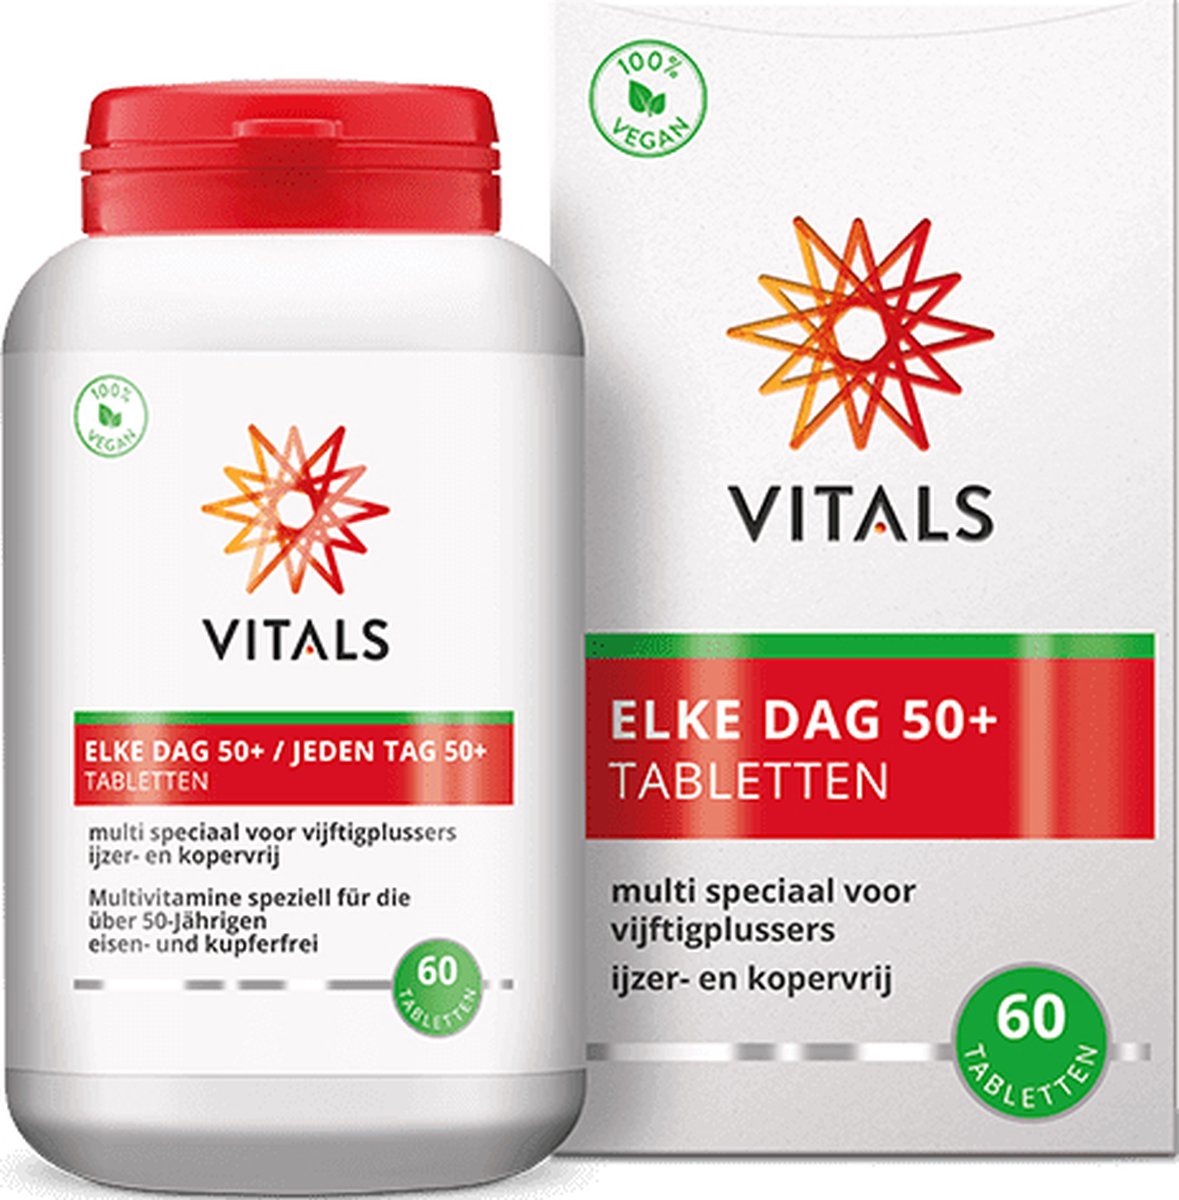 Vitals - Elke Dag 50+ - 60 tabletten - Multivitamine